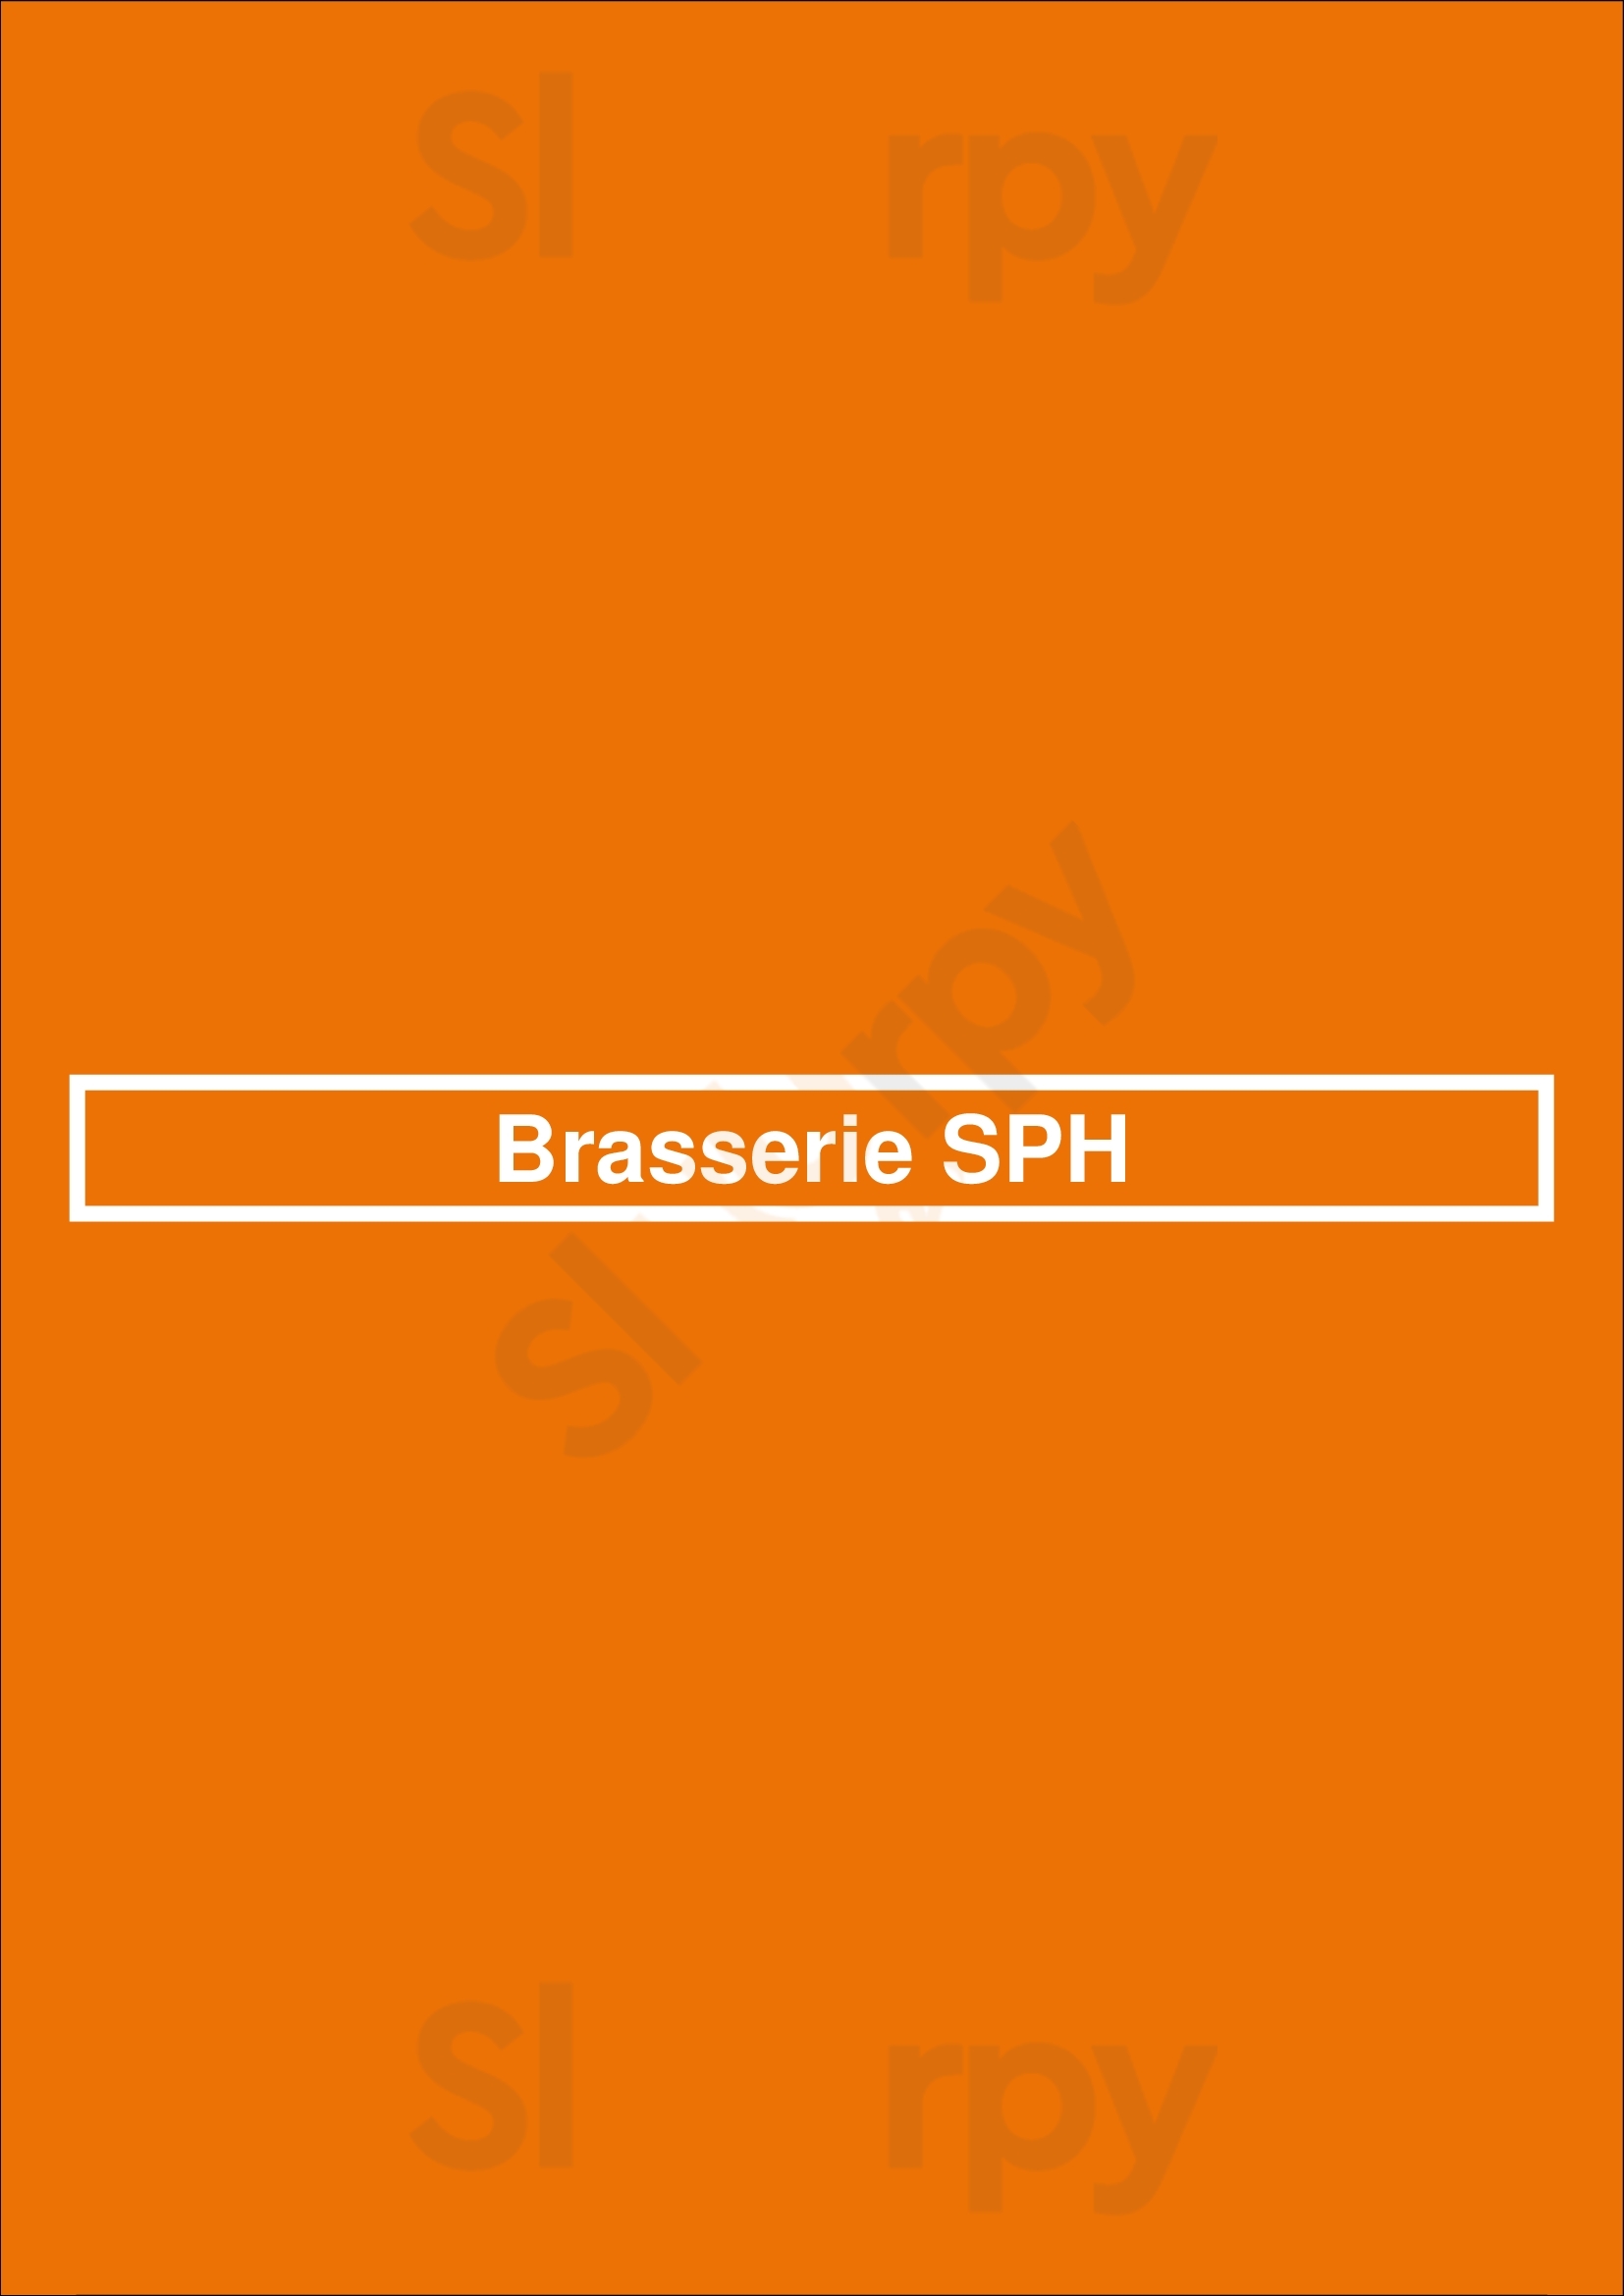 Brasserie Sph Groningen Menu - 1